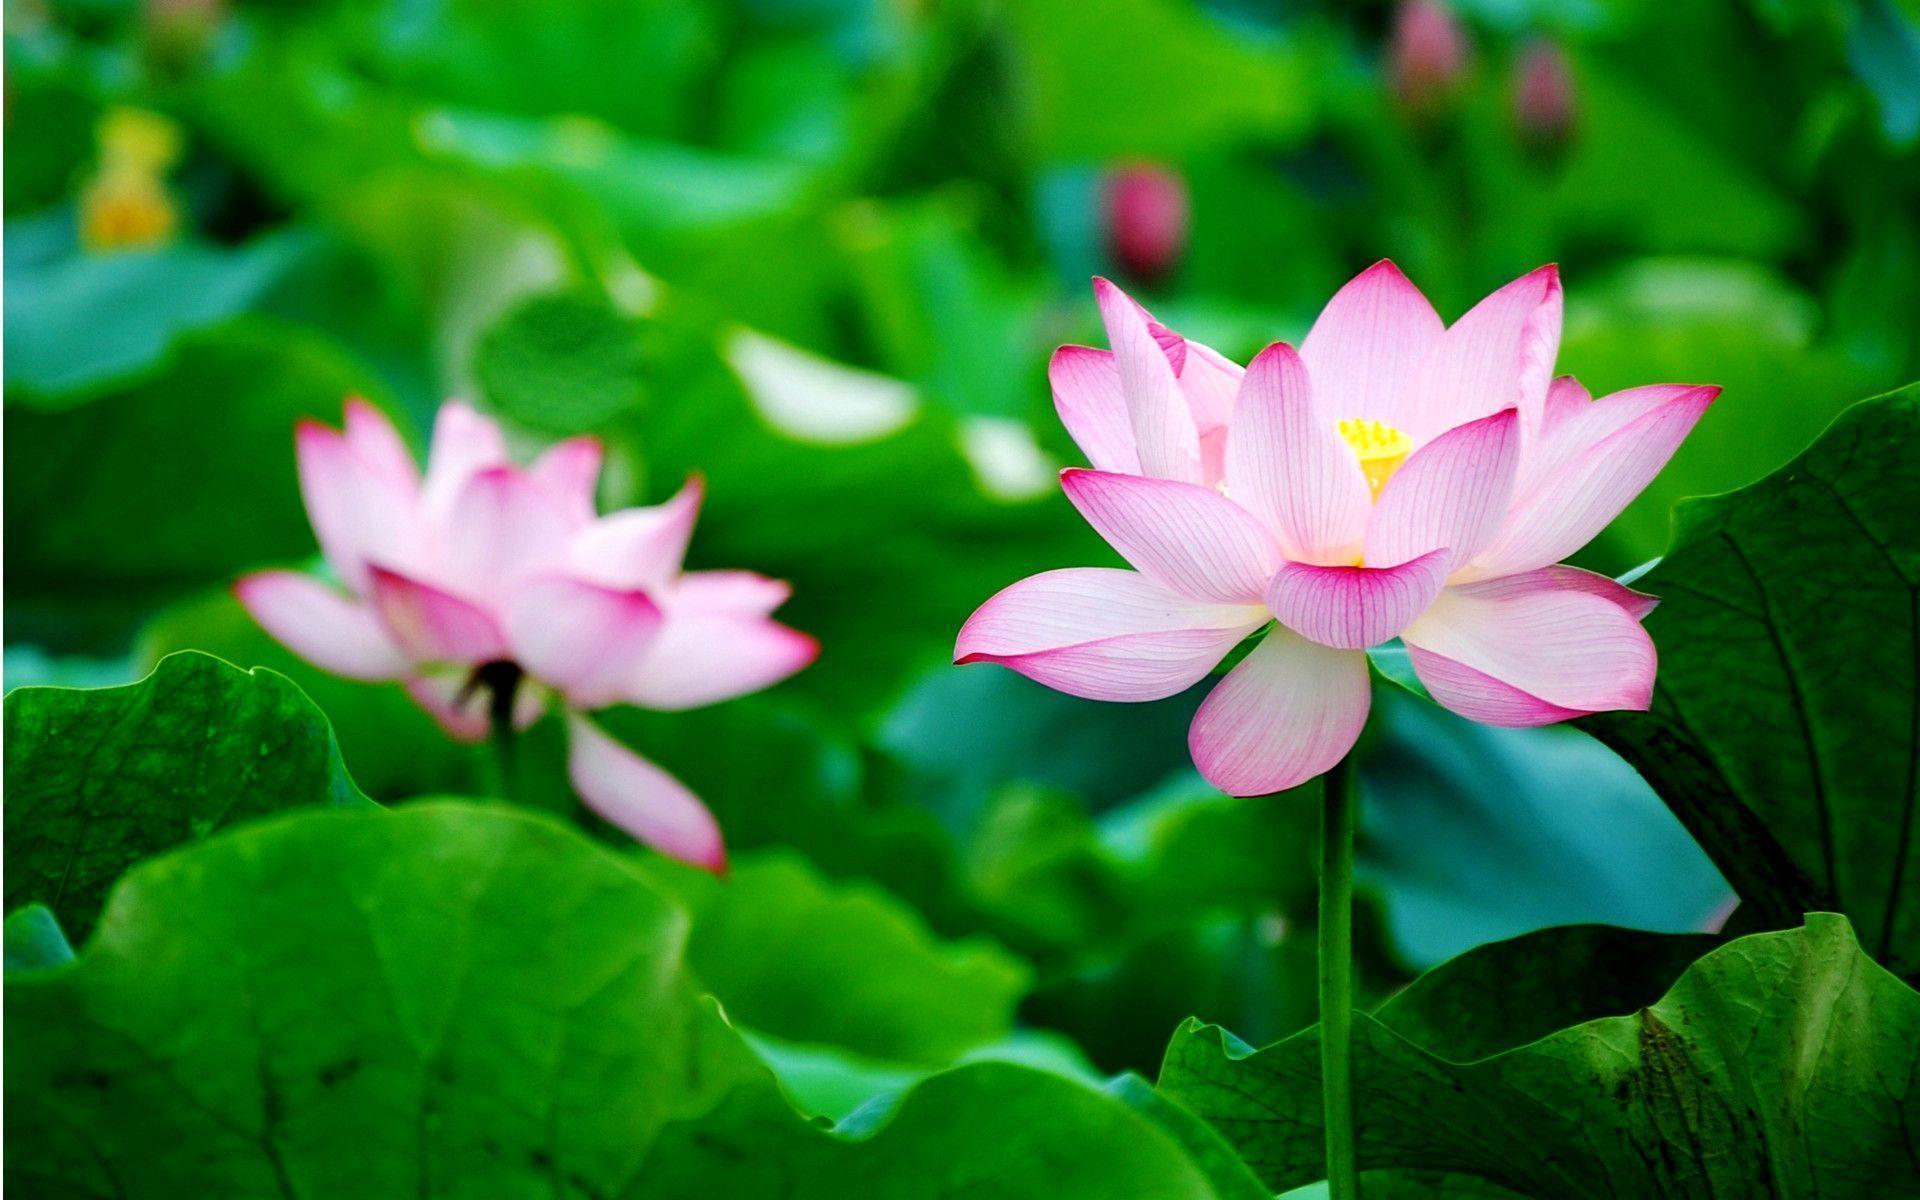 Lotus lotus flower wallpaper for desktop